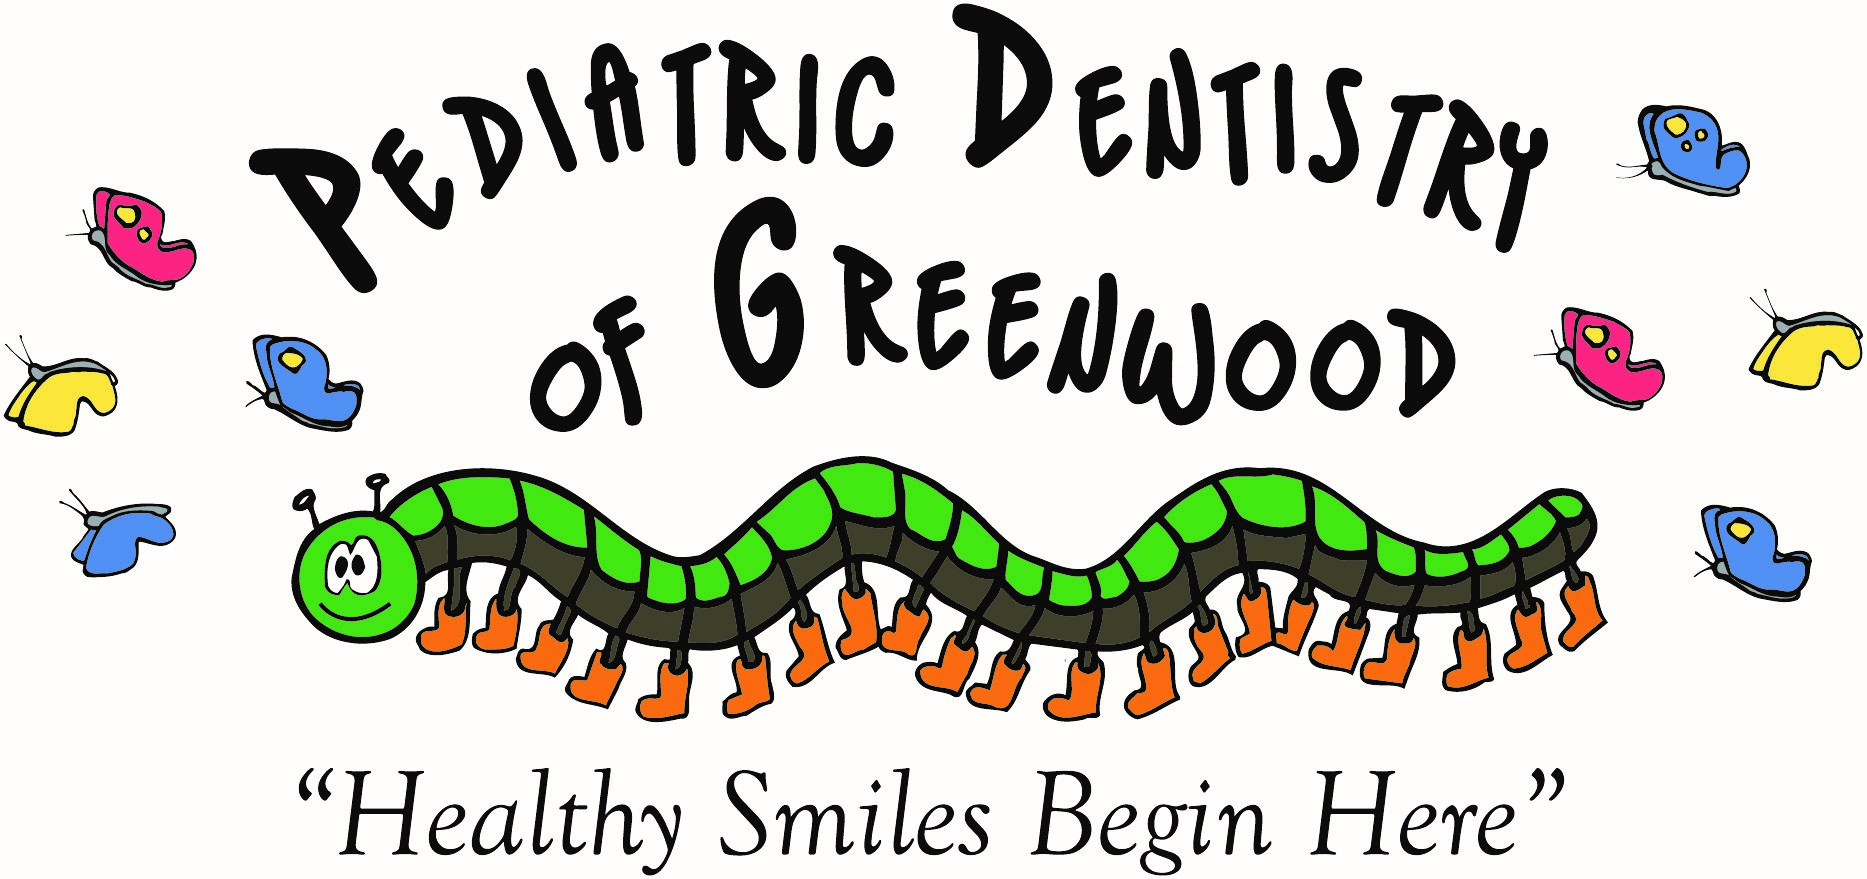 Pediatric Dentistry of Greenwood Logo.jpg